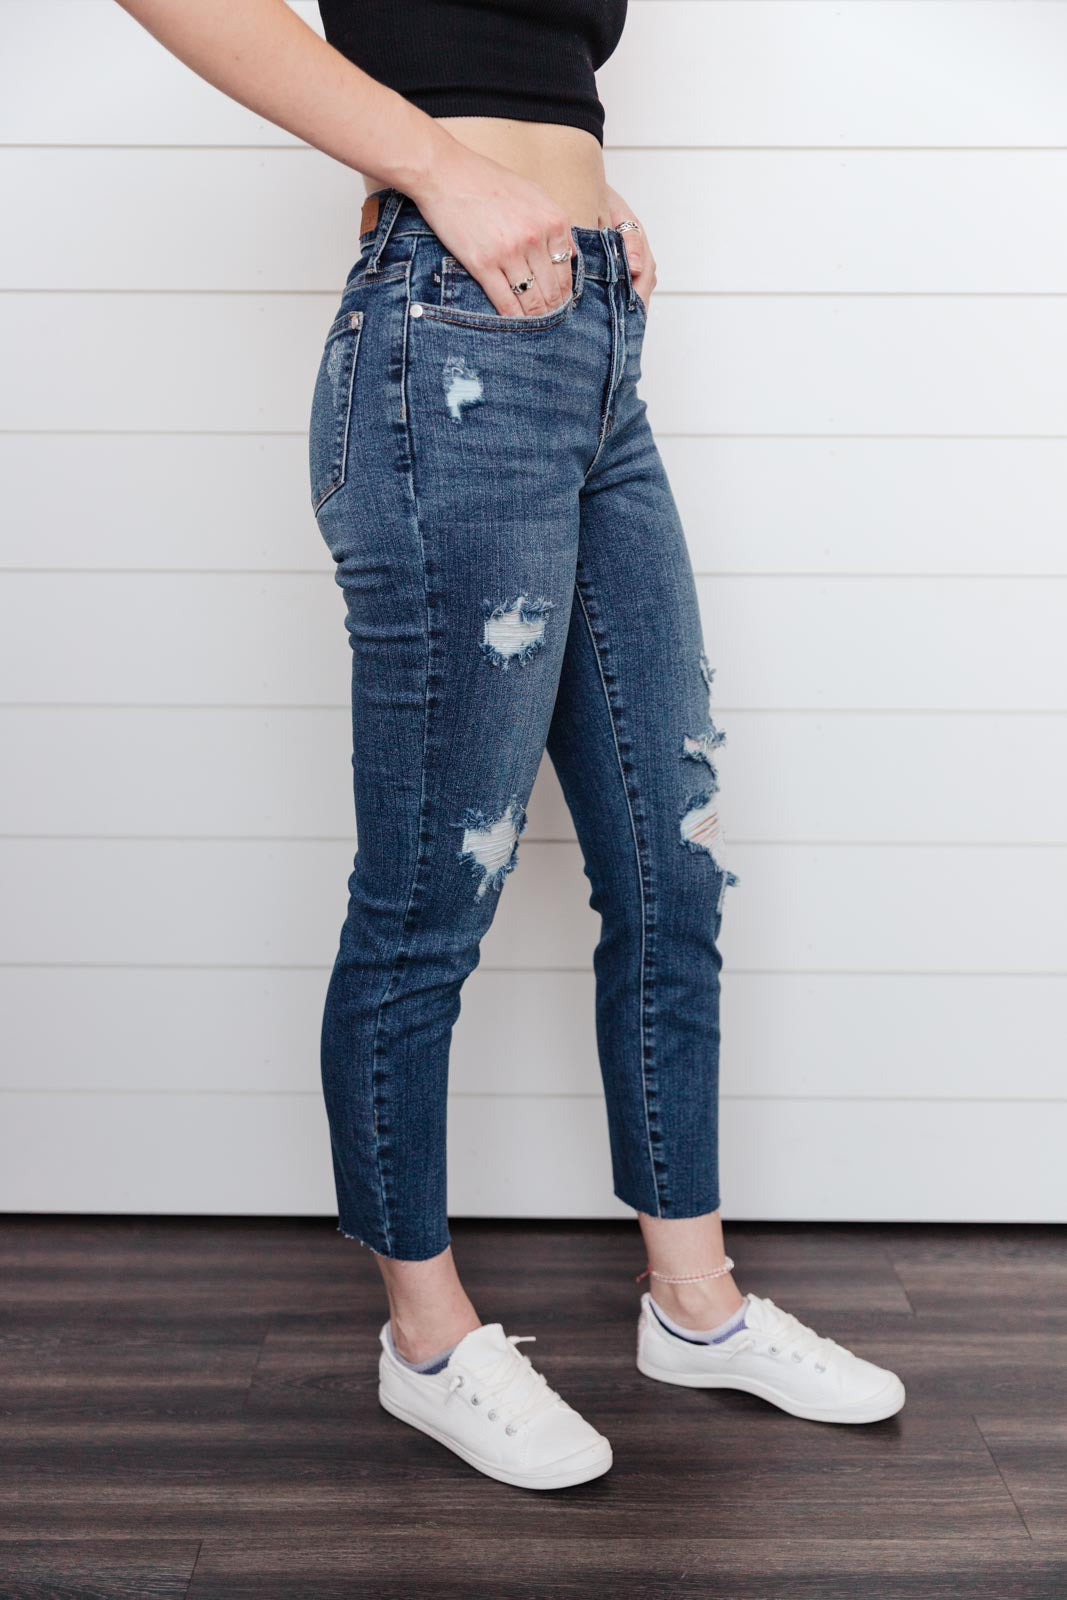 Vintage Indigo Cropped Skinny Jeans - 8/31/2021